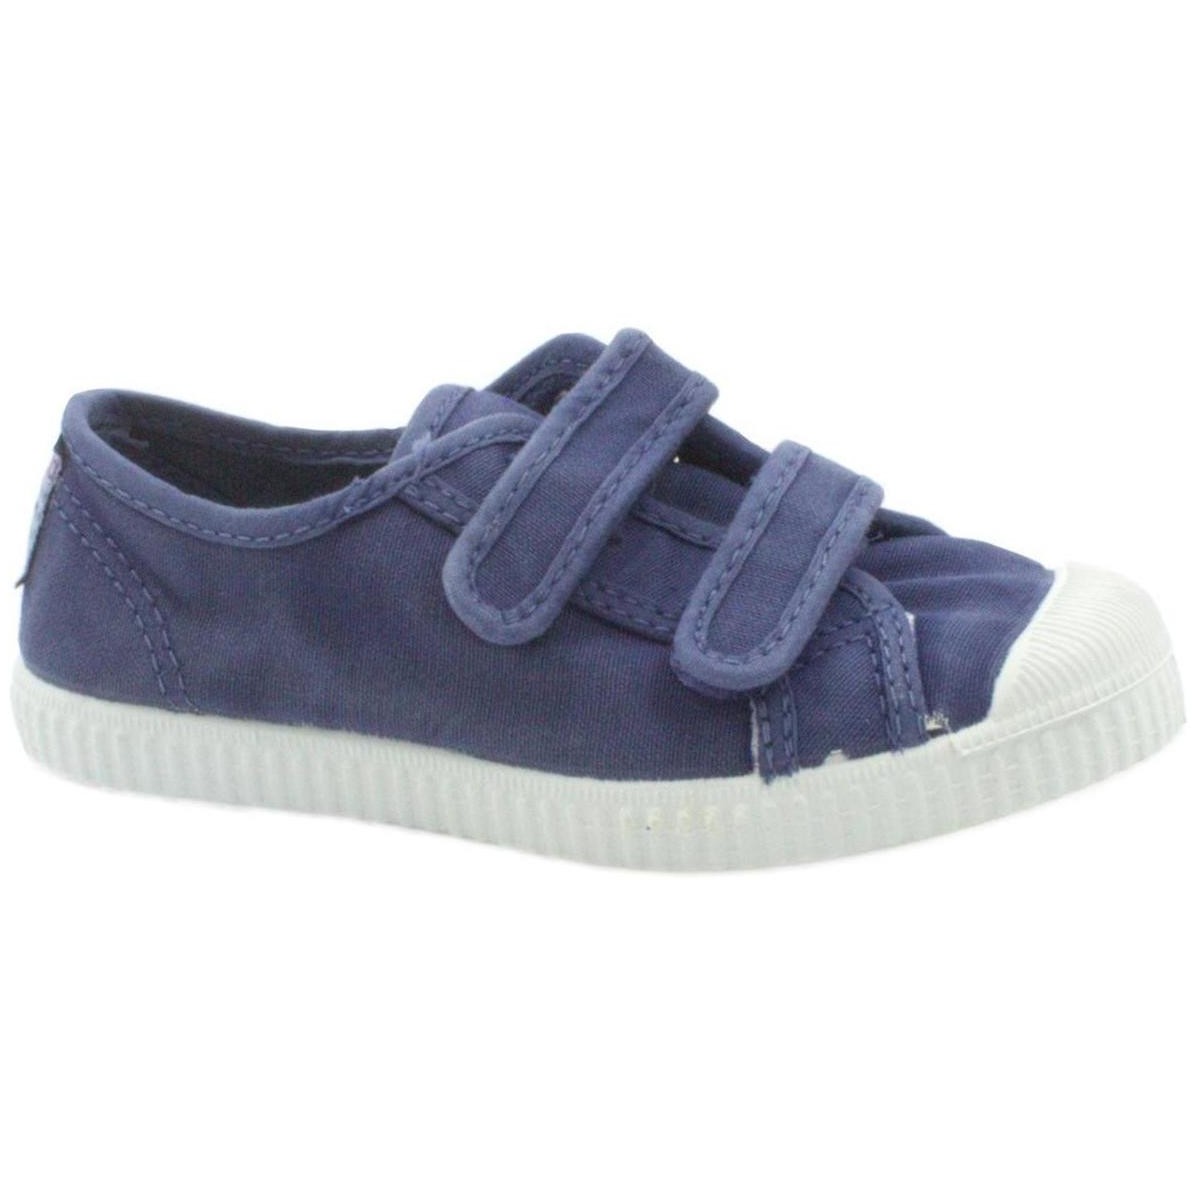 Schuhe Kinder Sneaker Low Cienta CIE-CCC-78777-84 Blau